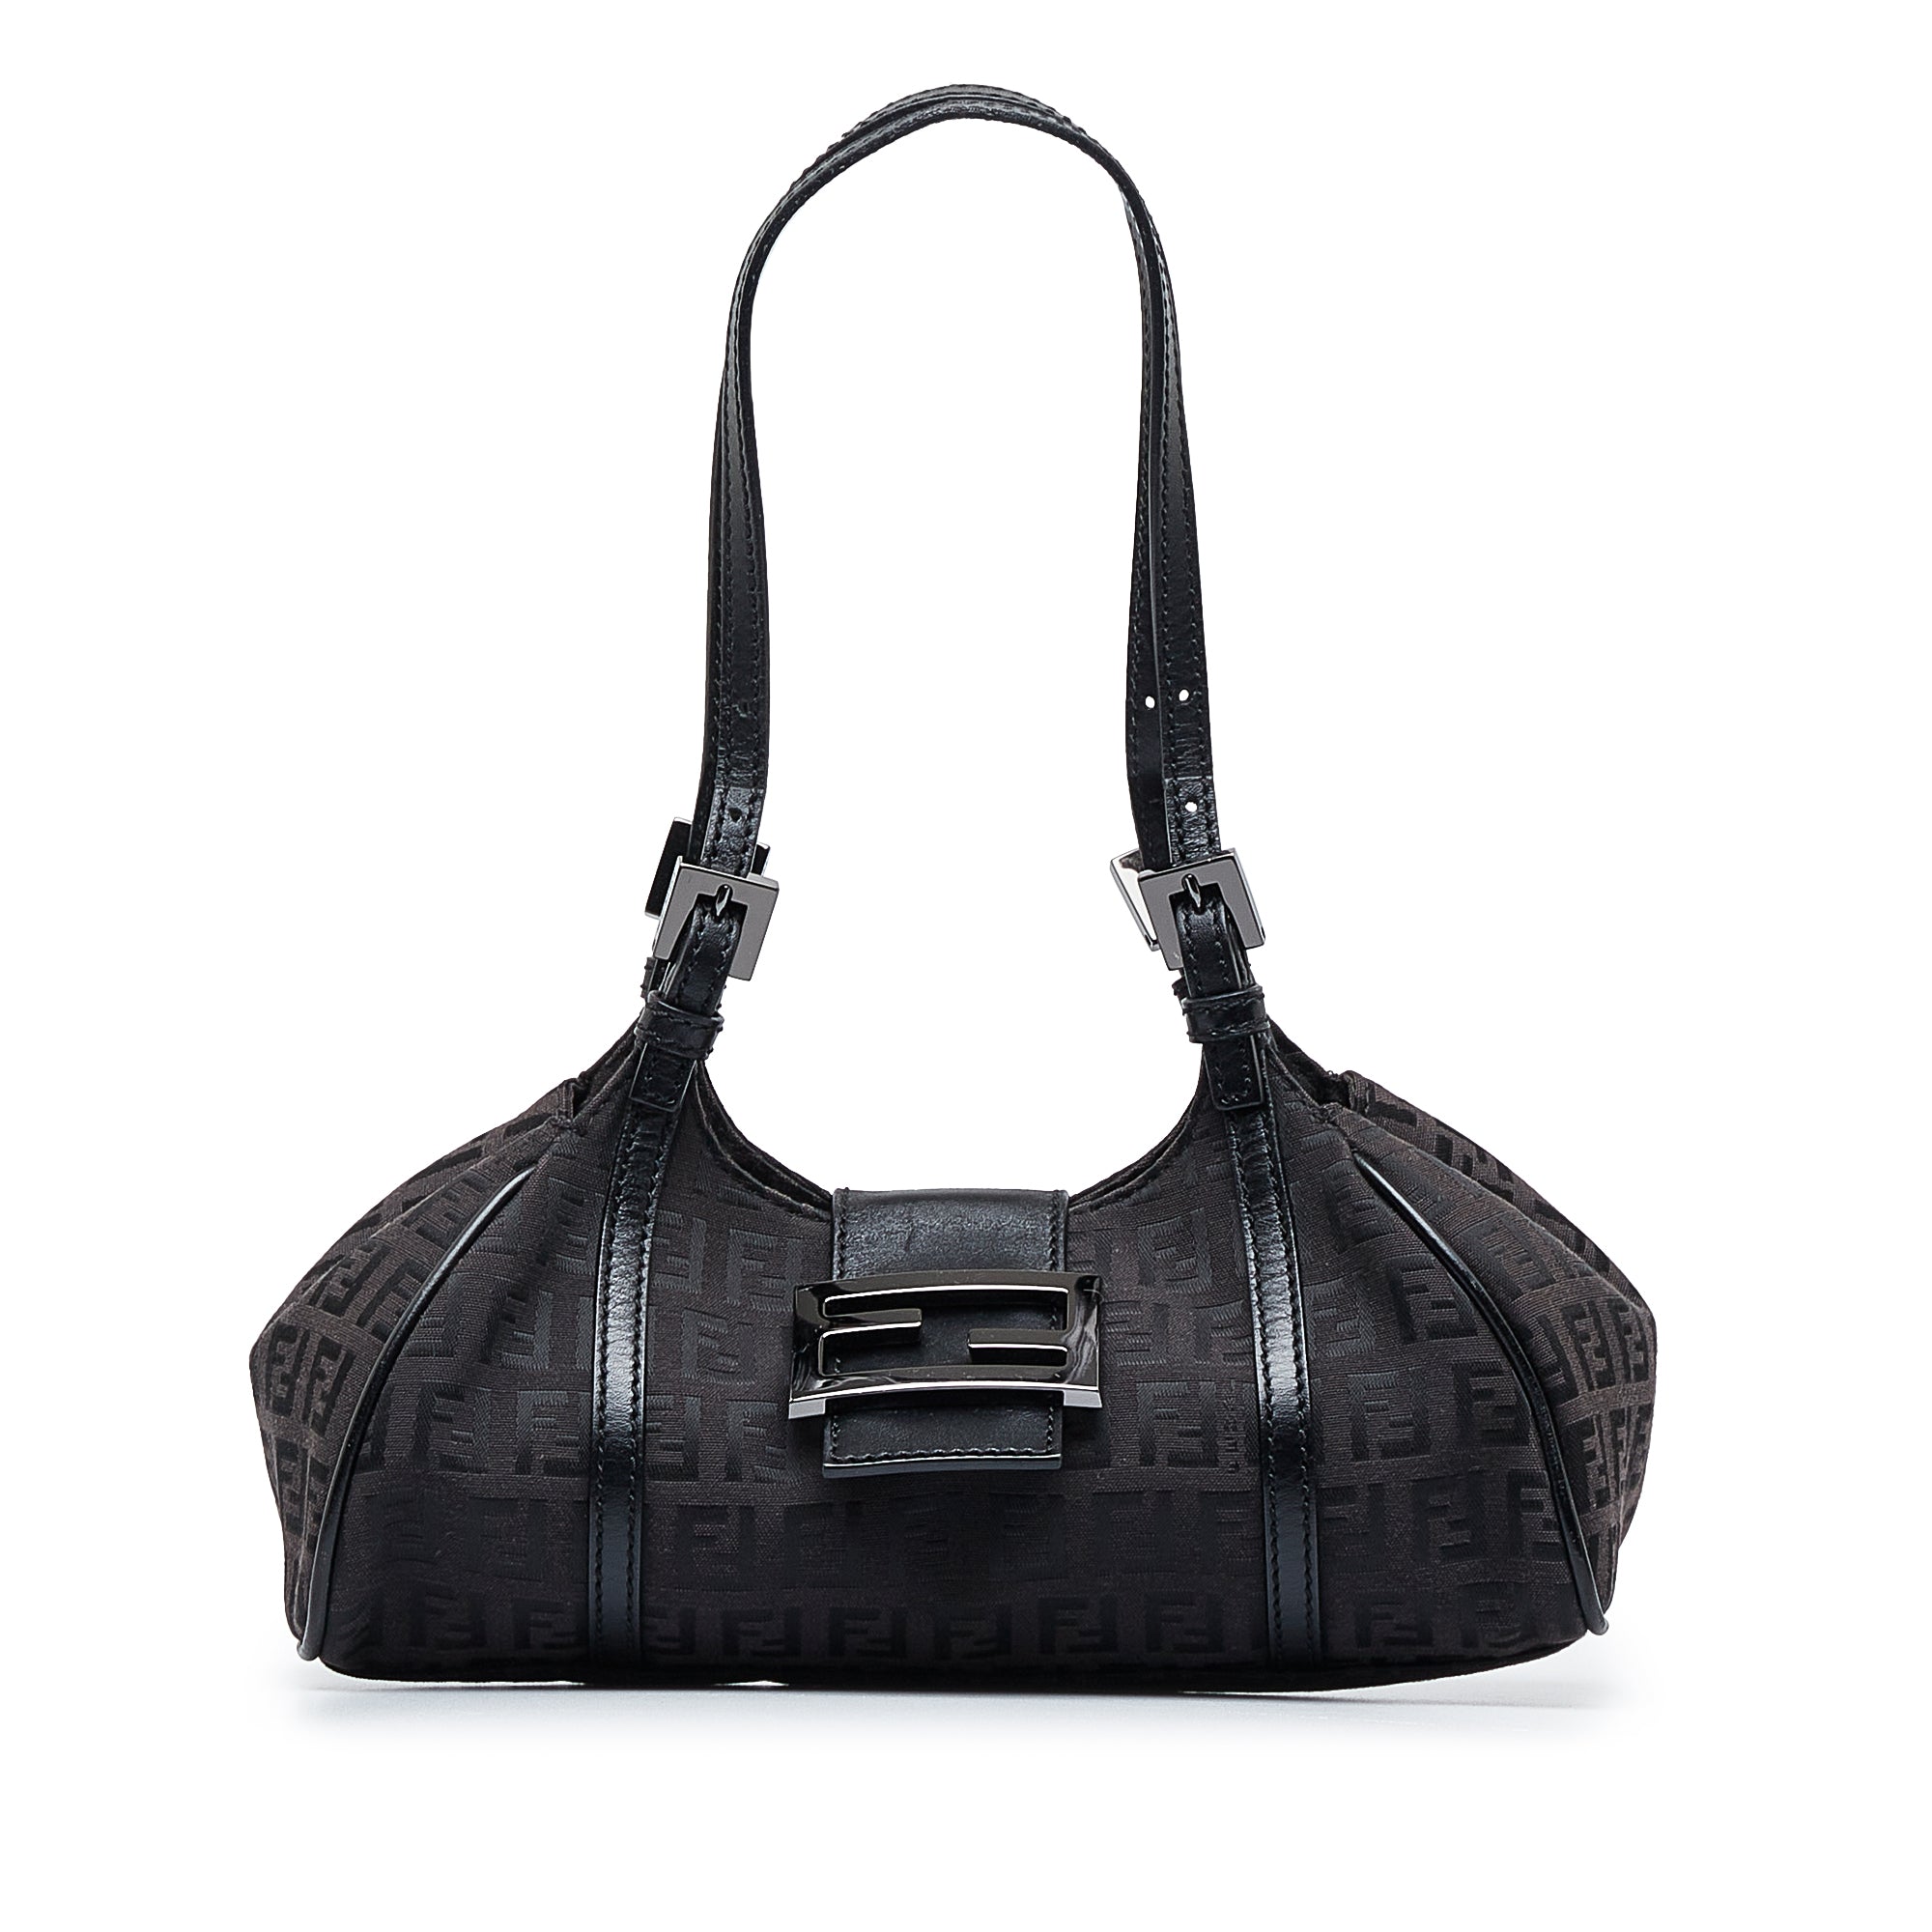 Authentic Fendi Vintage Leather Trimmed Zucchino tote bag handbag